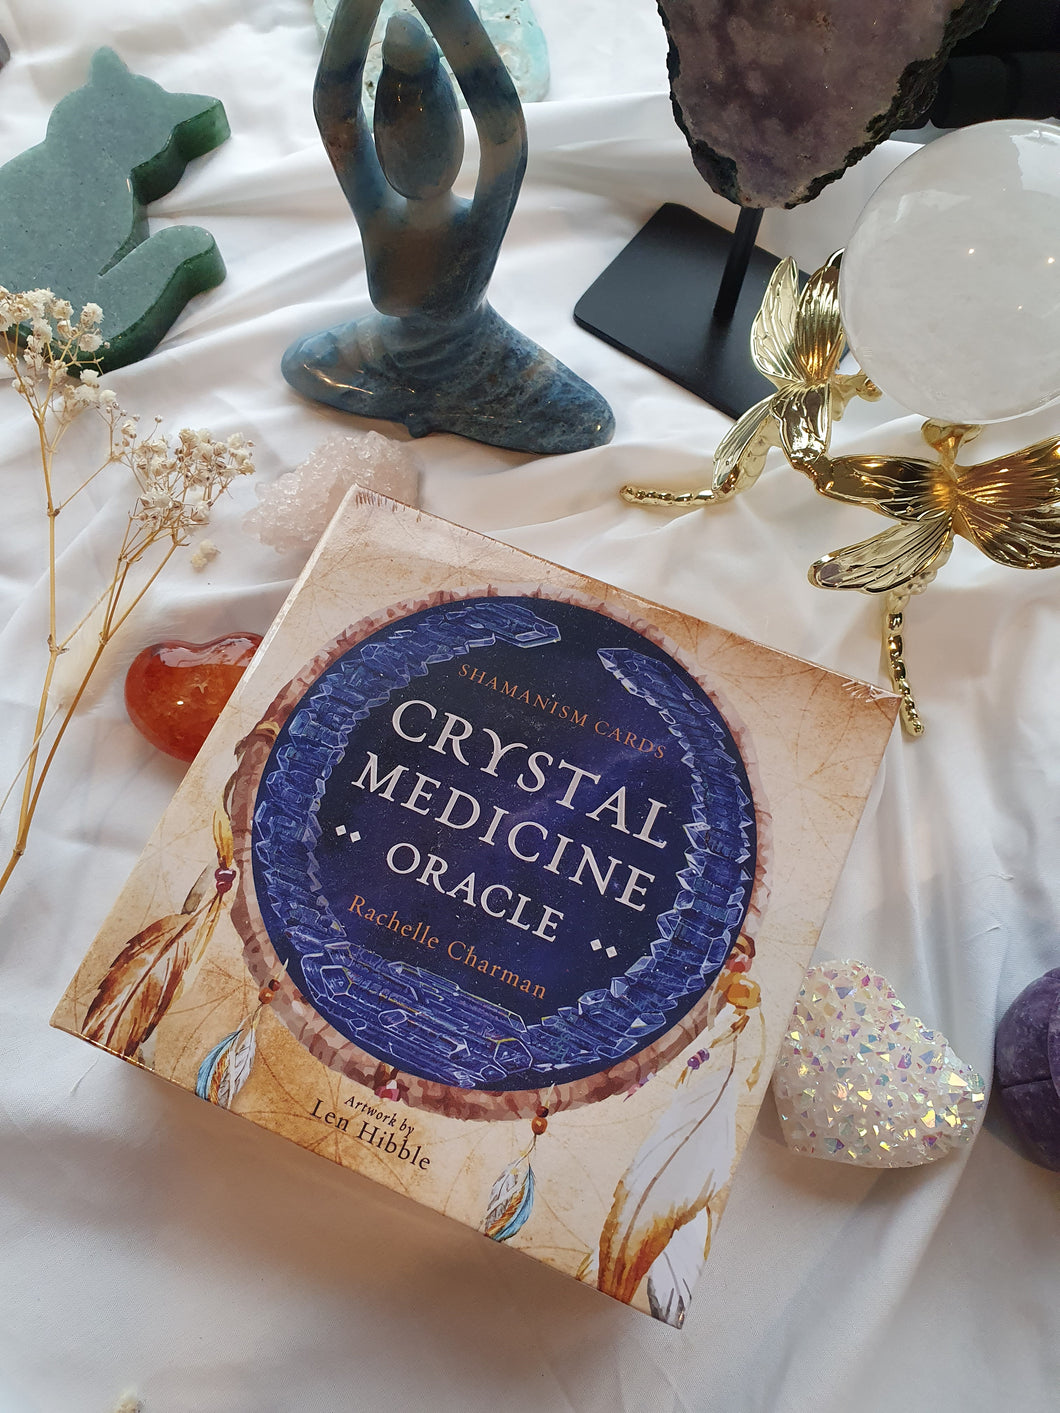 Crystal Medicine Oracle Cards